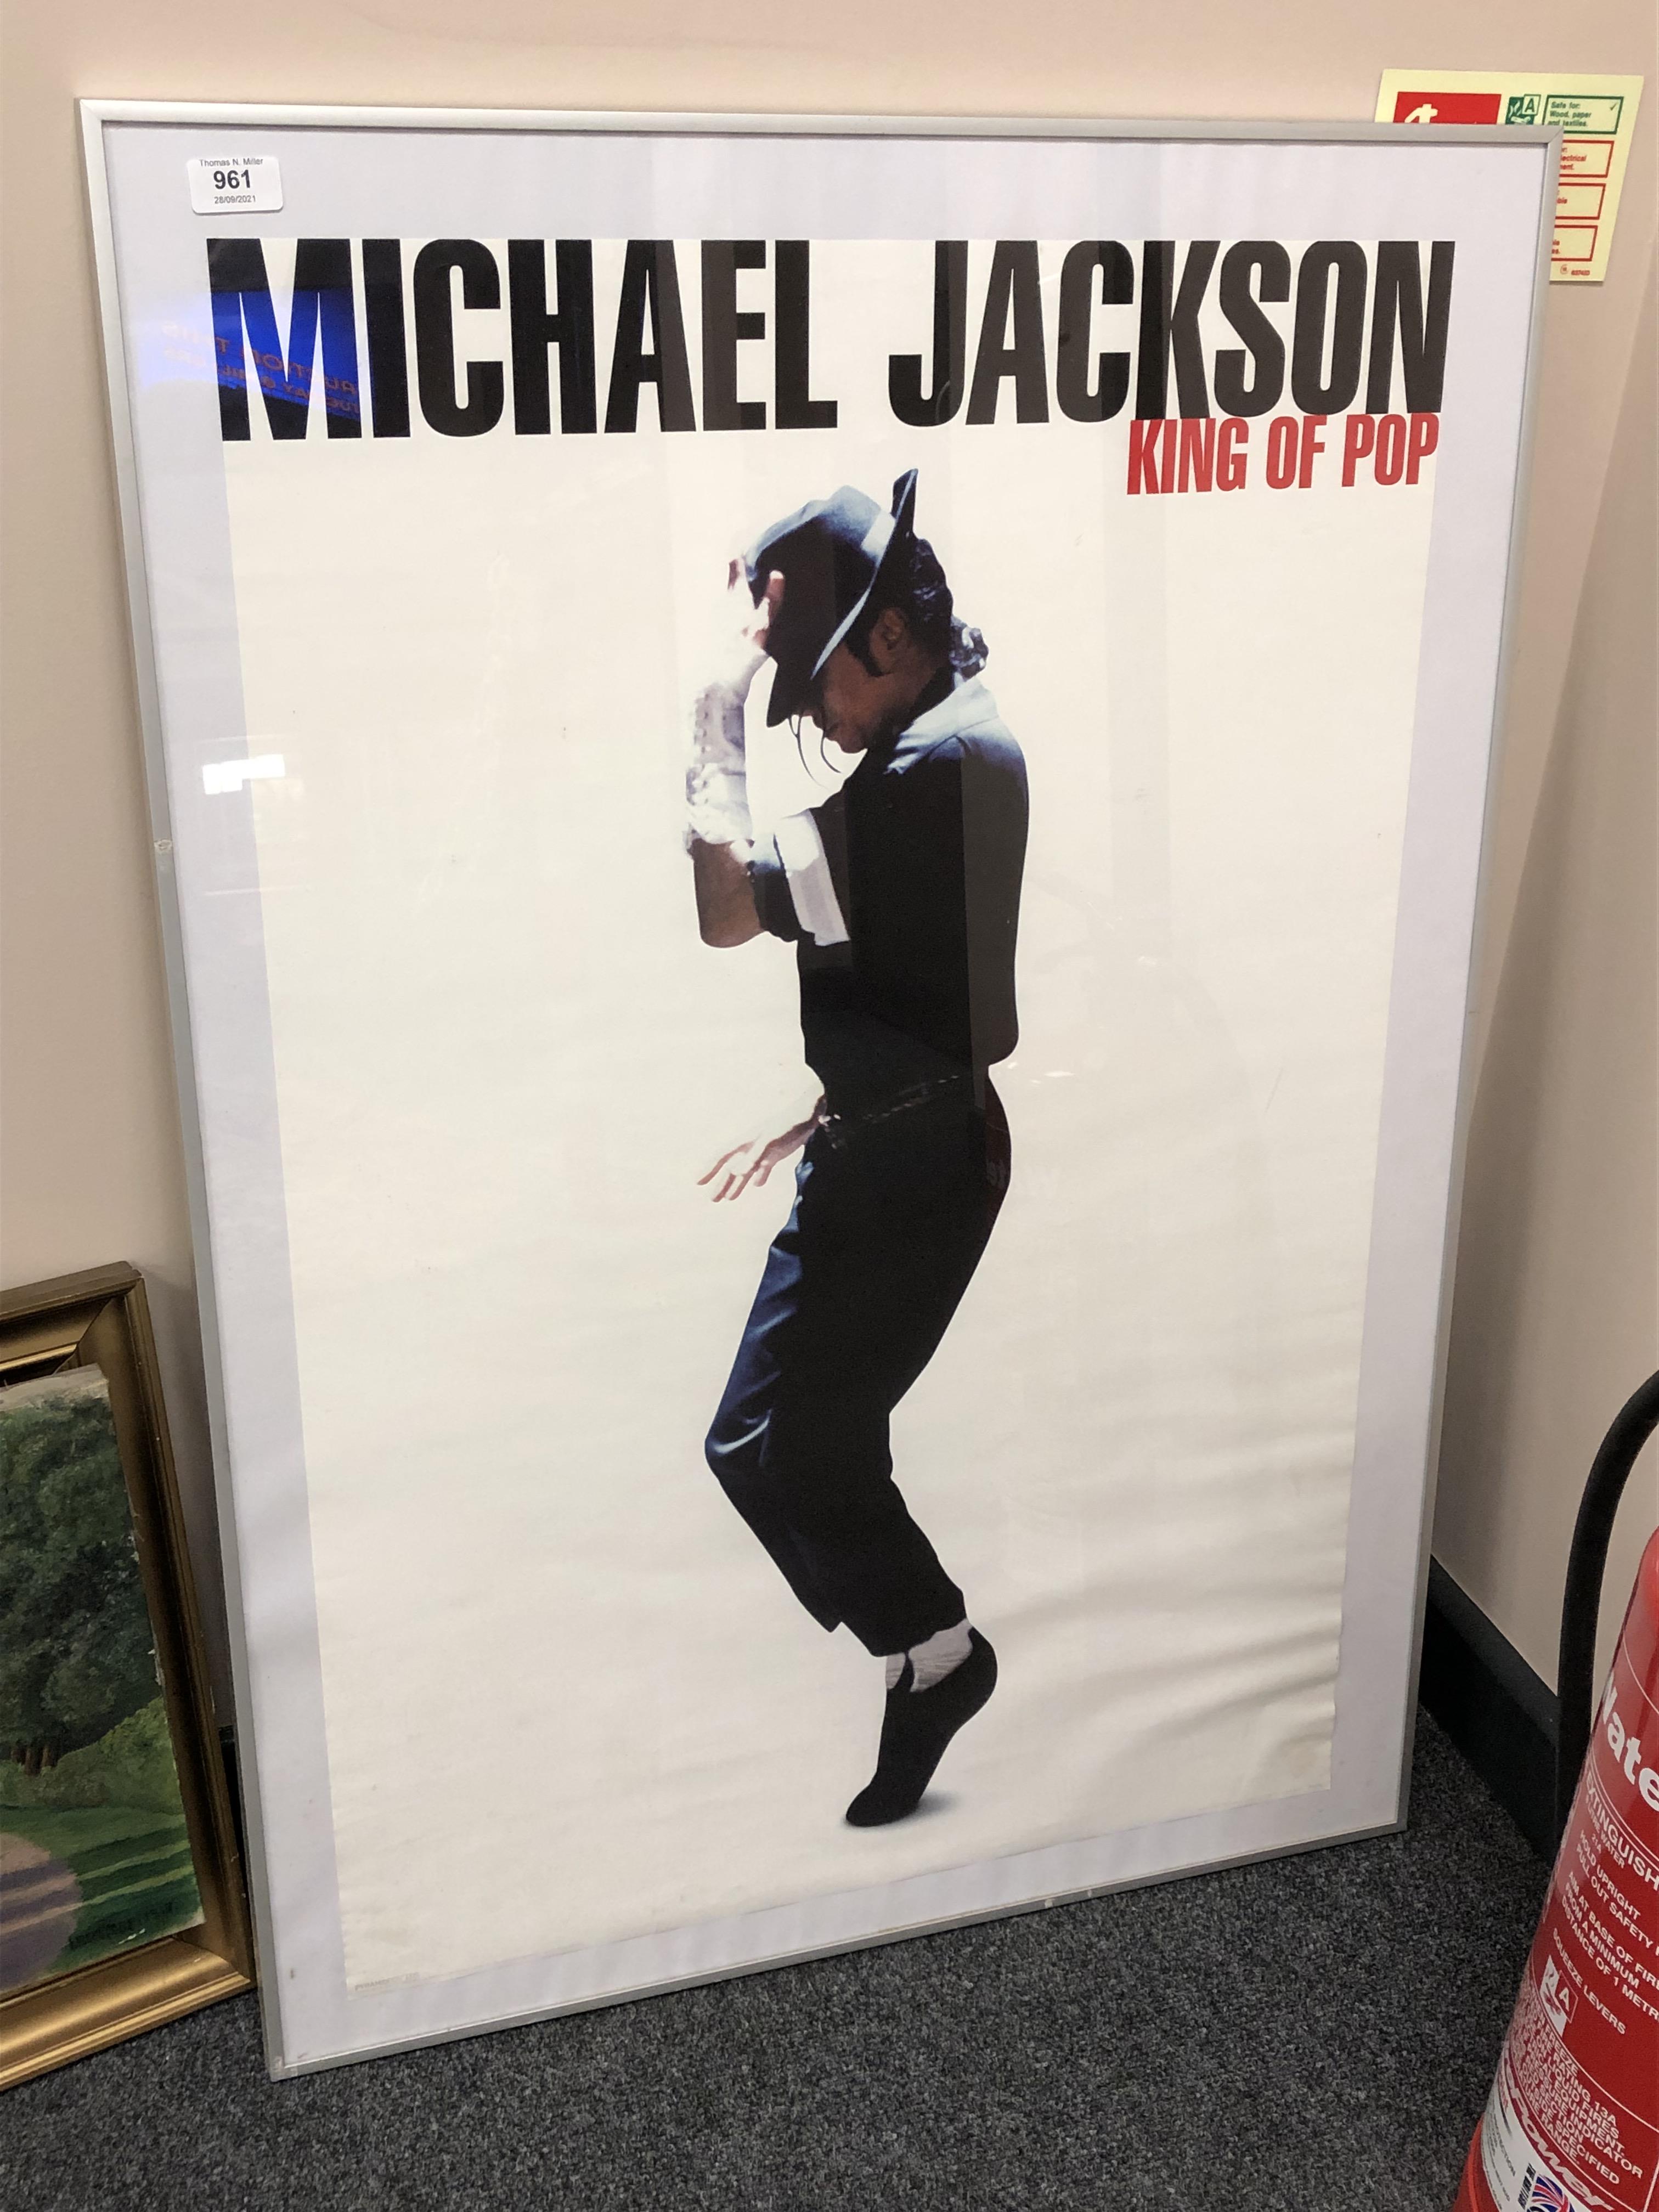 A framed poster : Michael Jackson King of Pop,